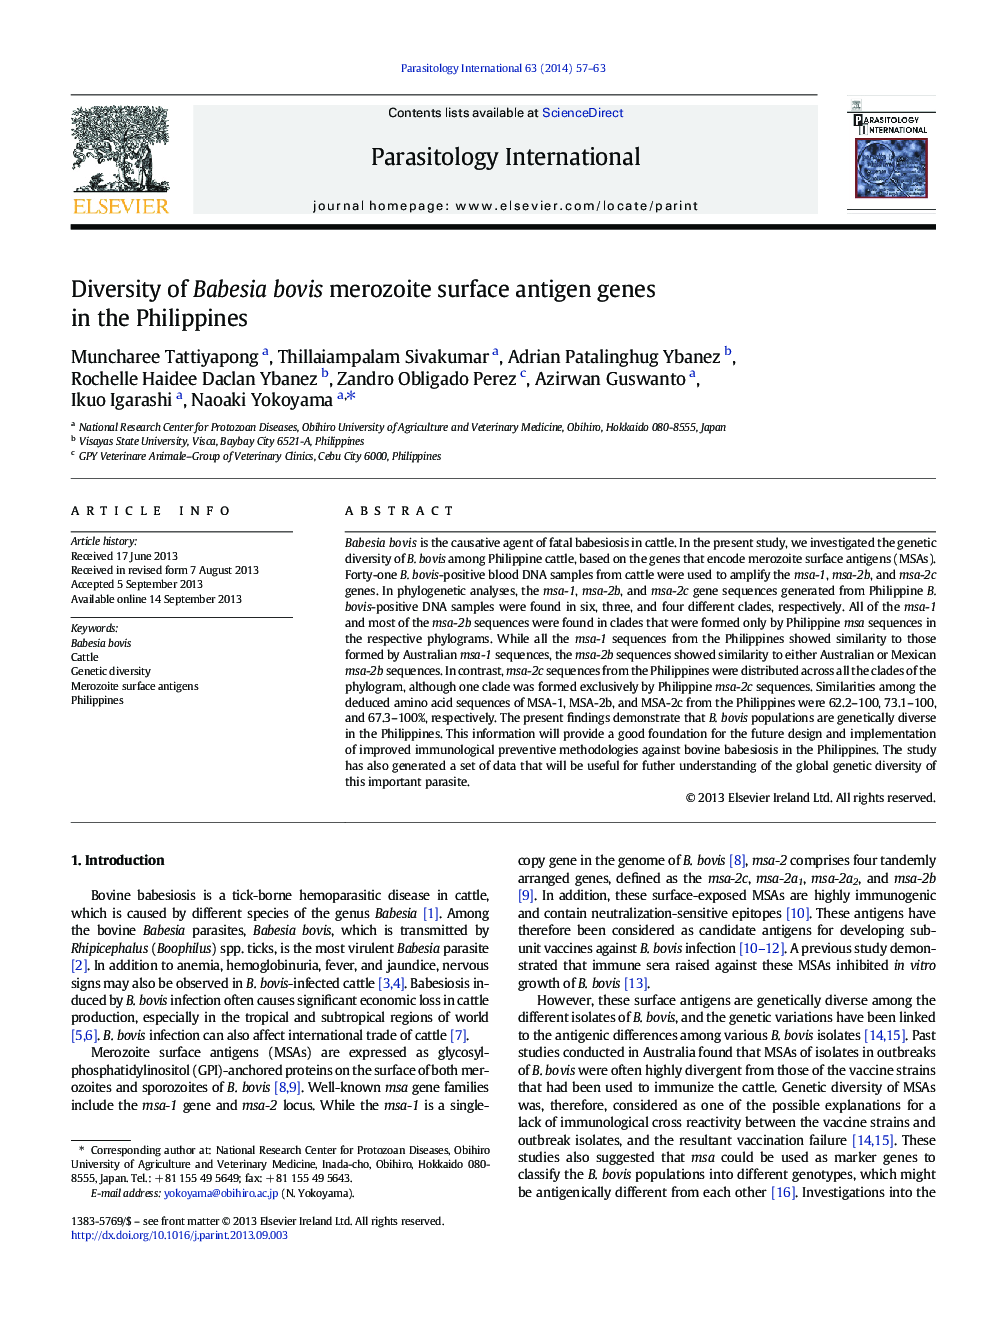 Diversity of Babesia bovis merozoite surface antigen genes in the Philippines